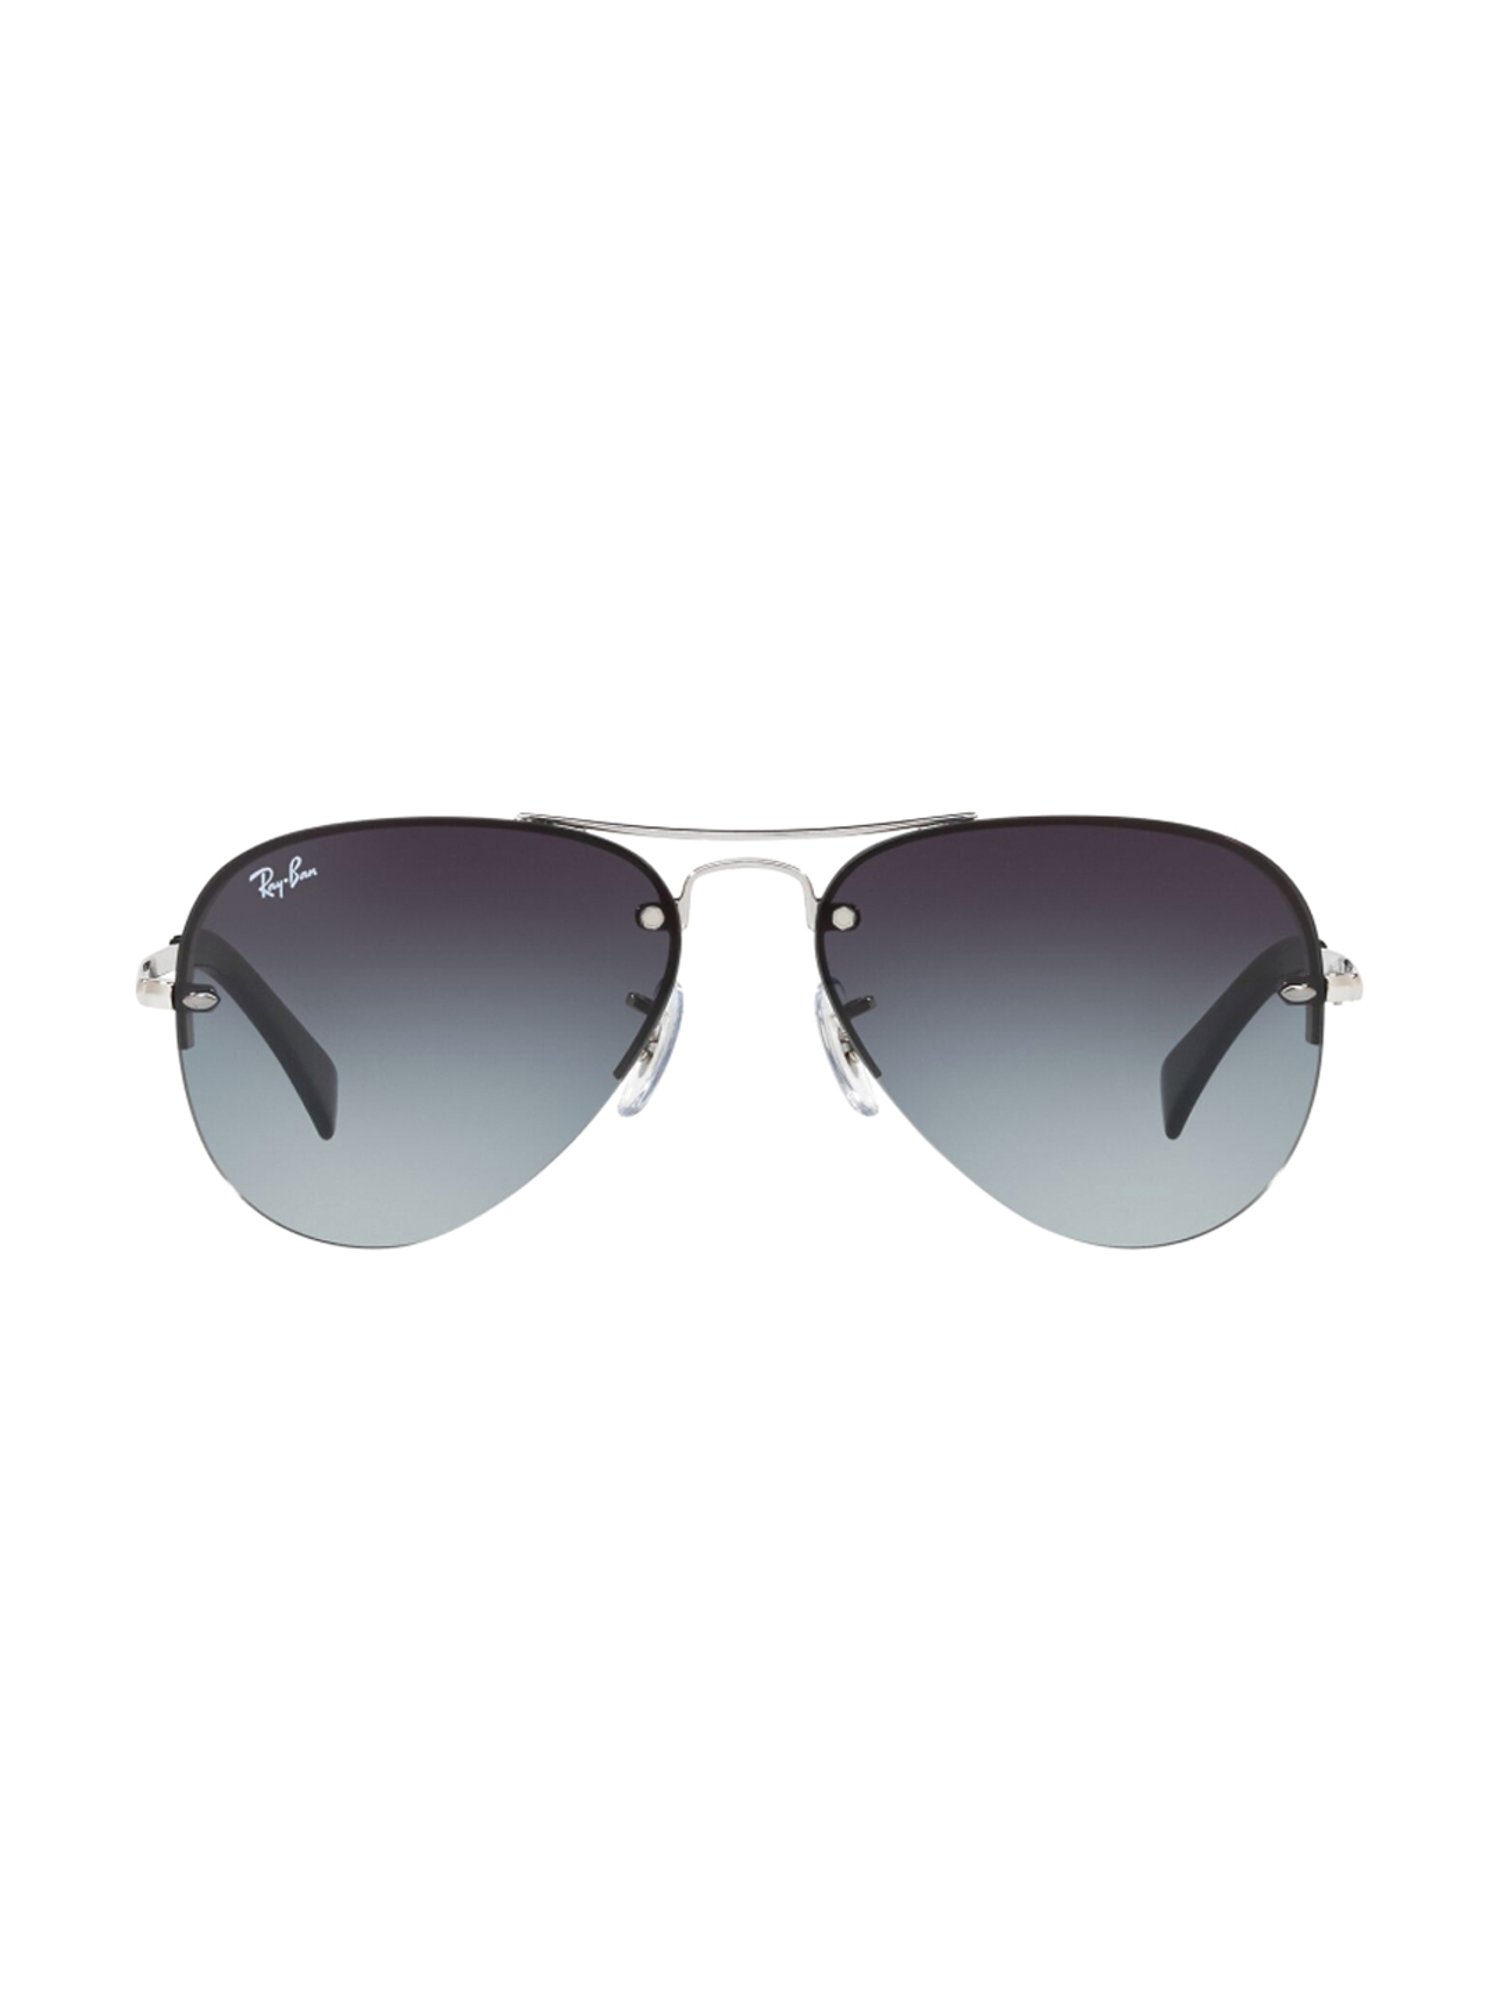 ray ban highstreet aviator sunglasses